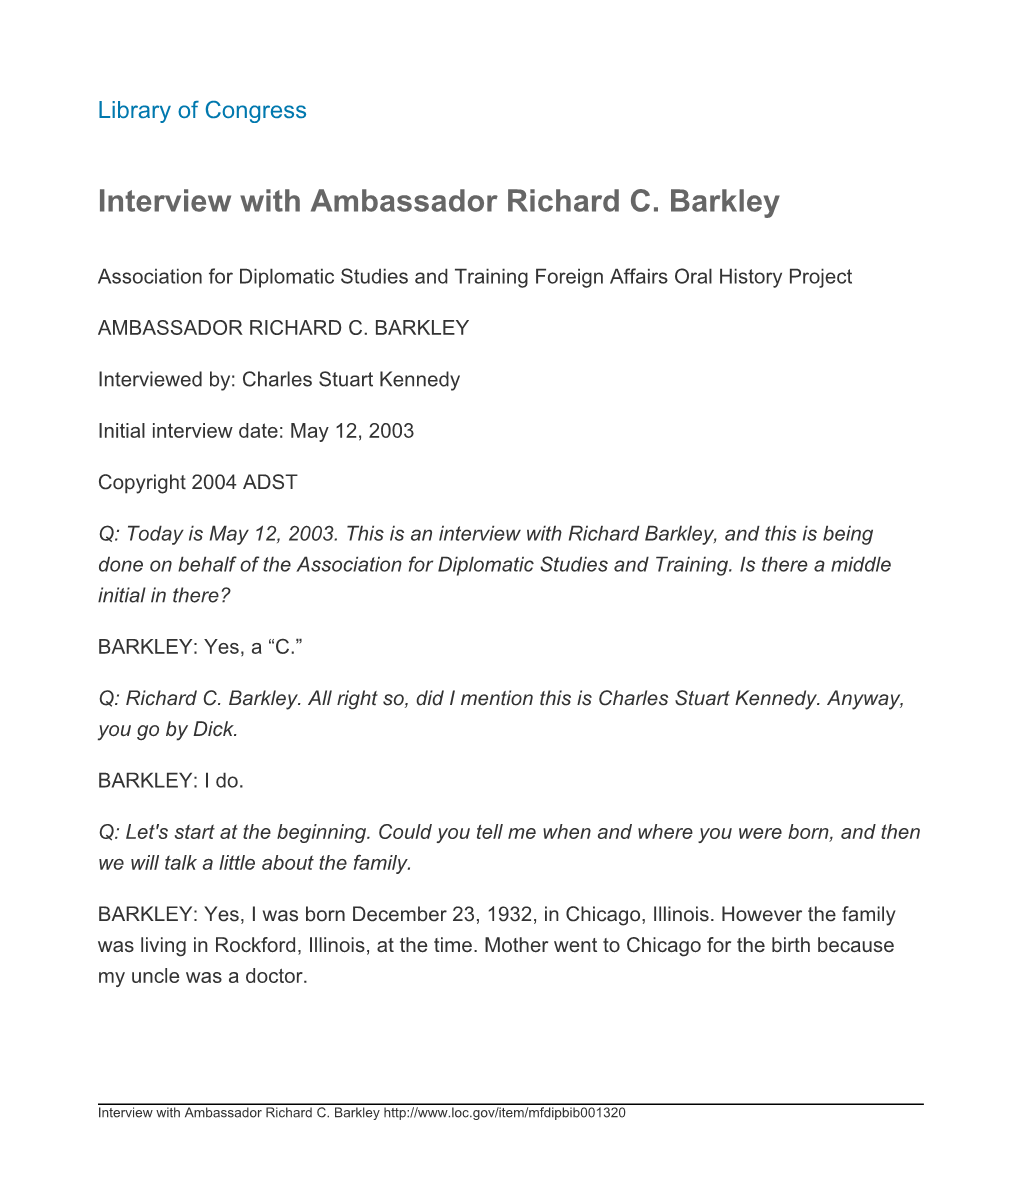 Interview with Ambassador Richard C. Barkley